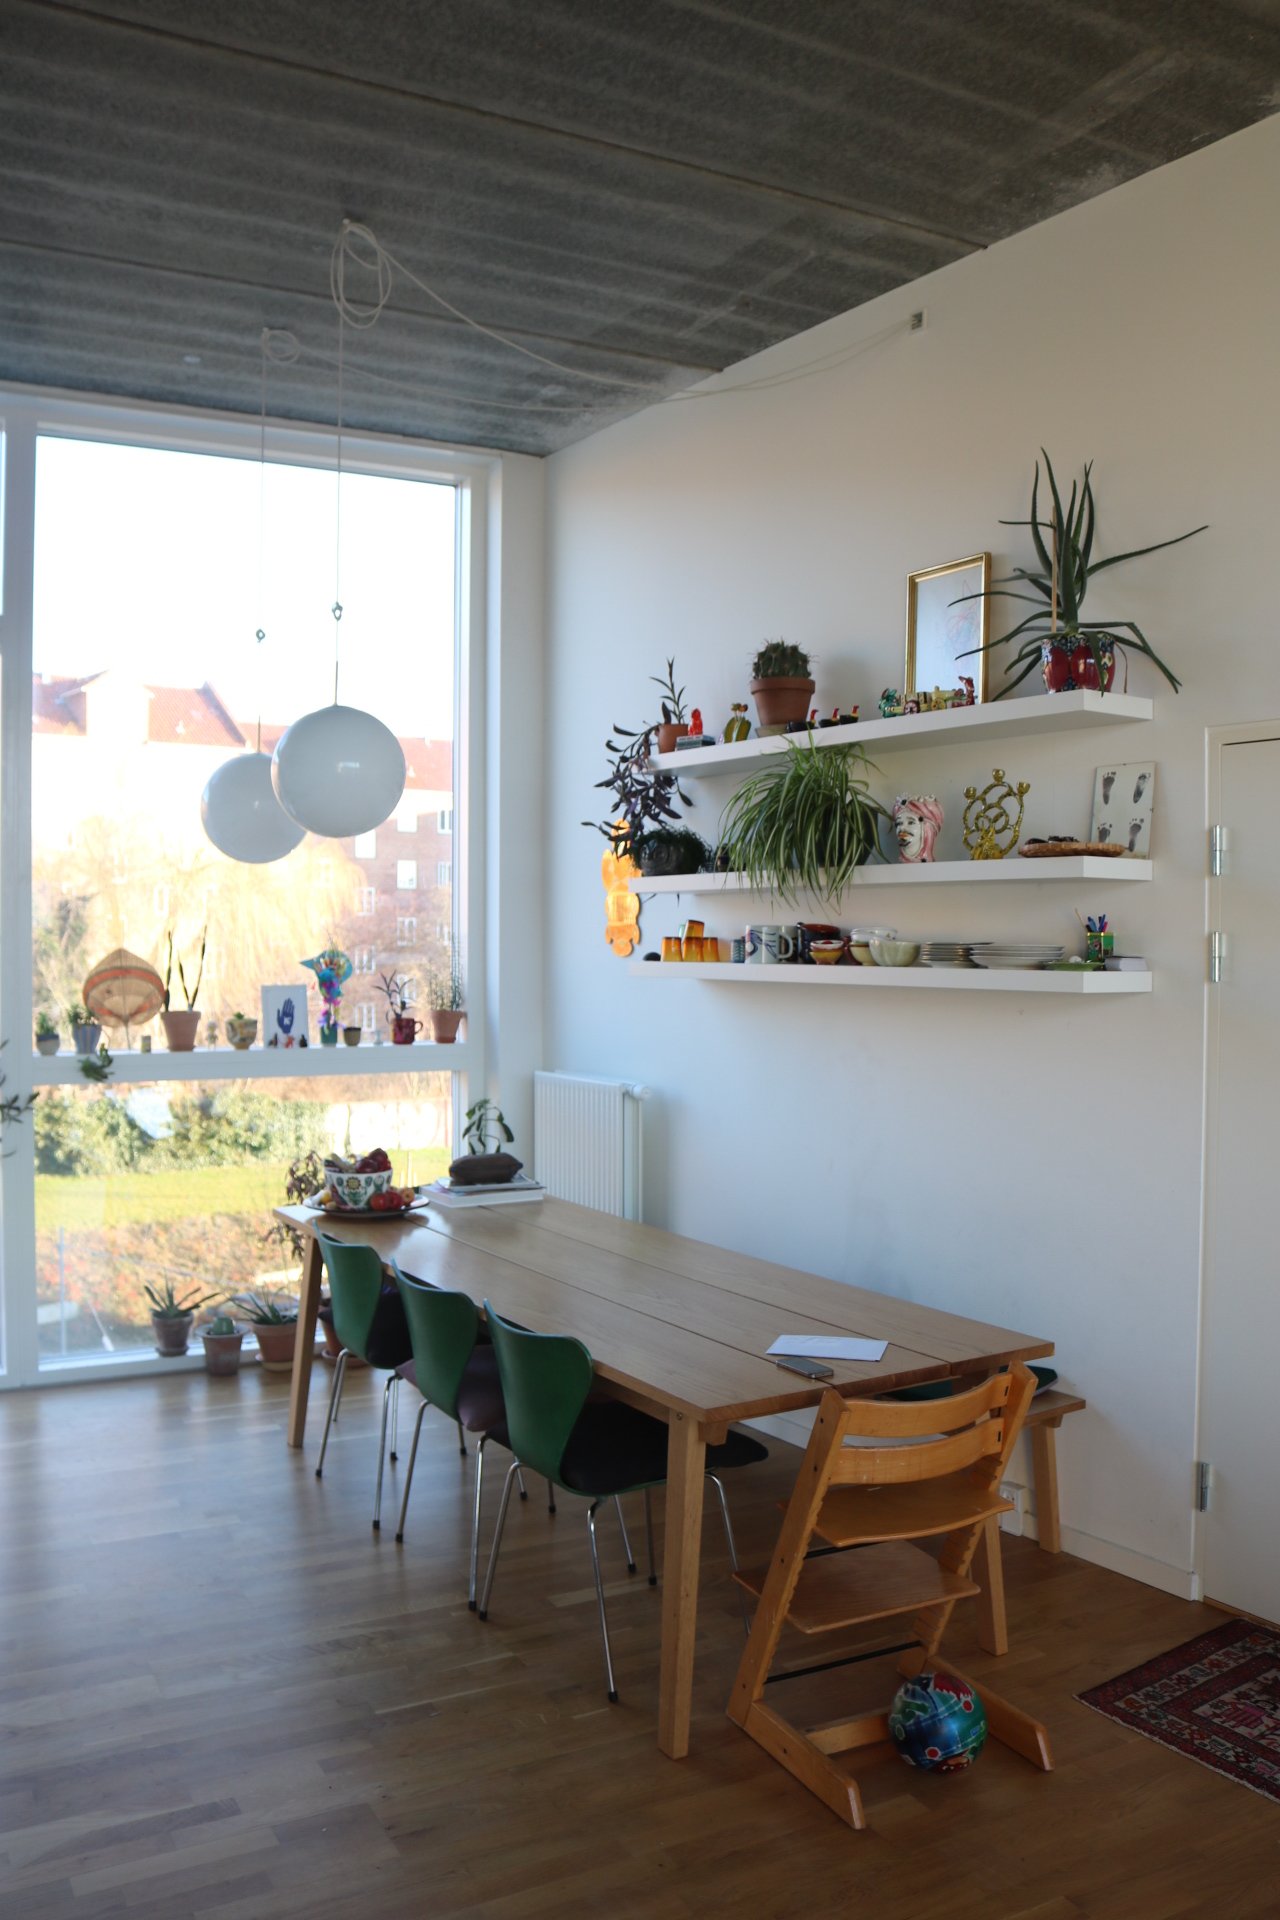 Inside Nikolai's apartment in Copenhagen which he shares with his wife and child. Photo c/o Nikolai Kotlarczyk.